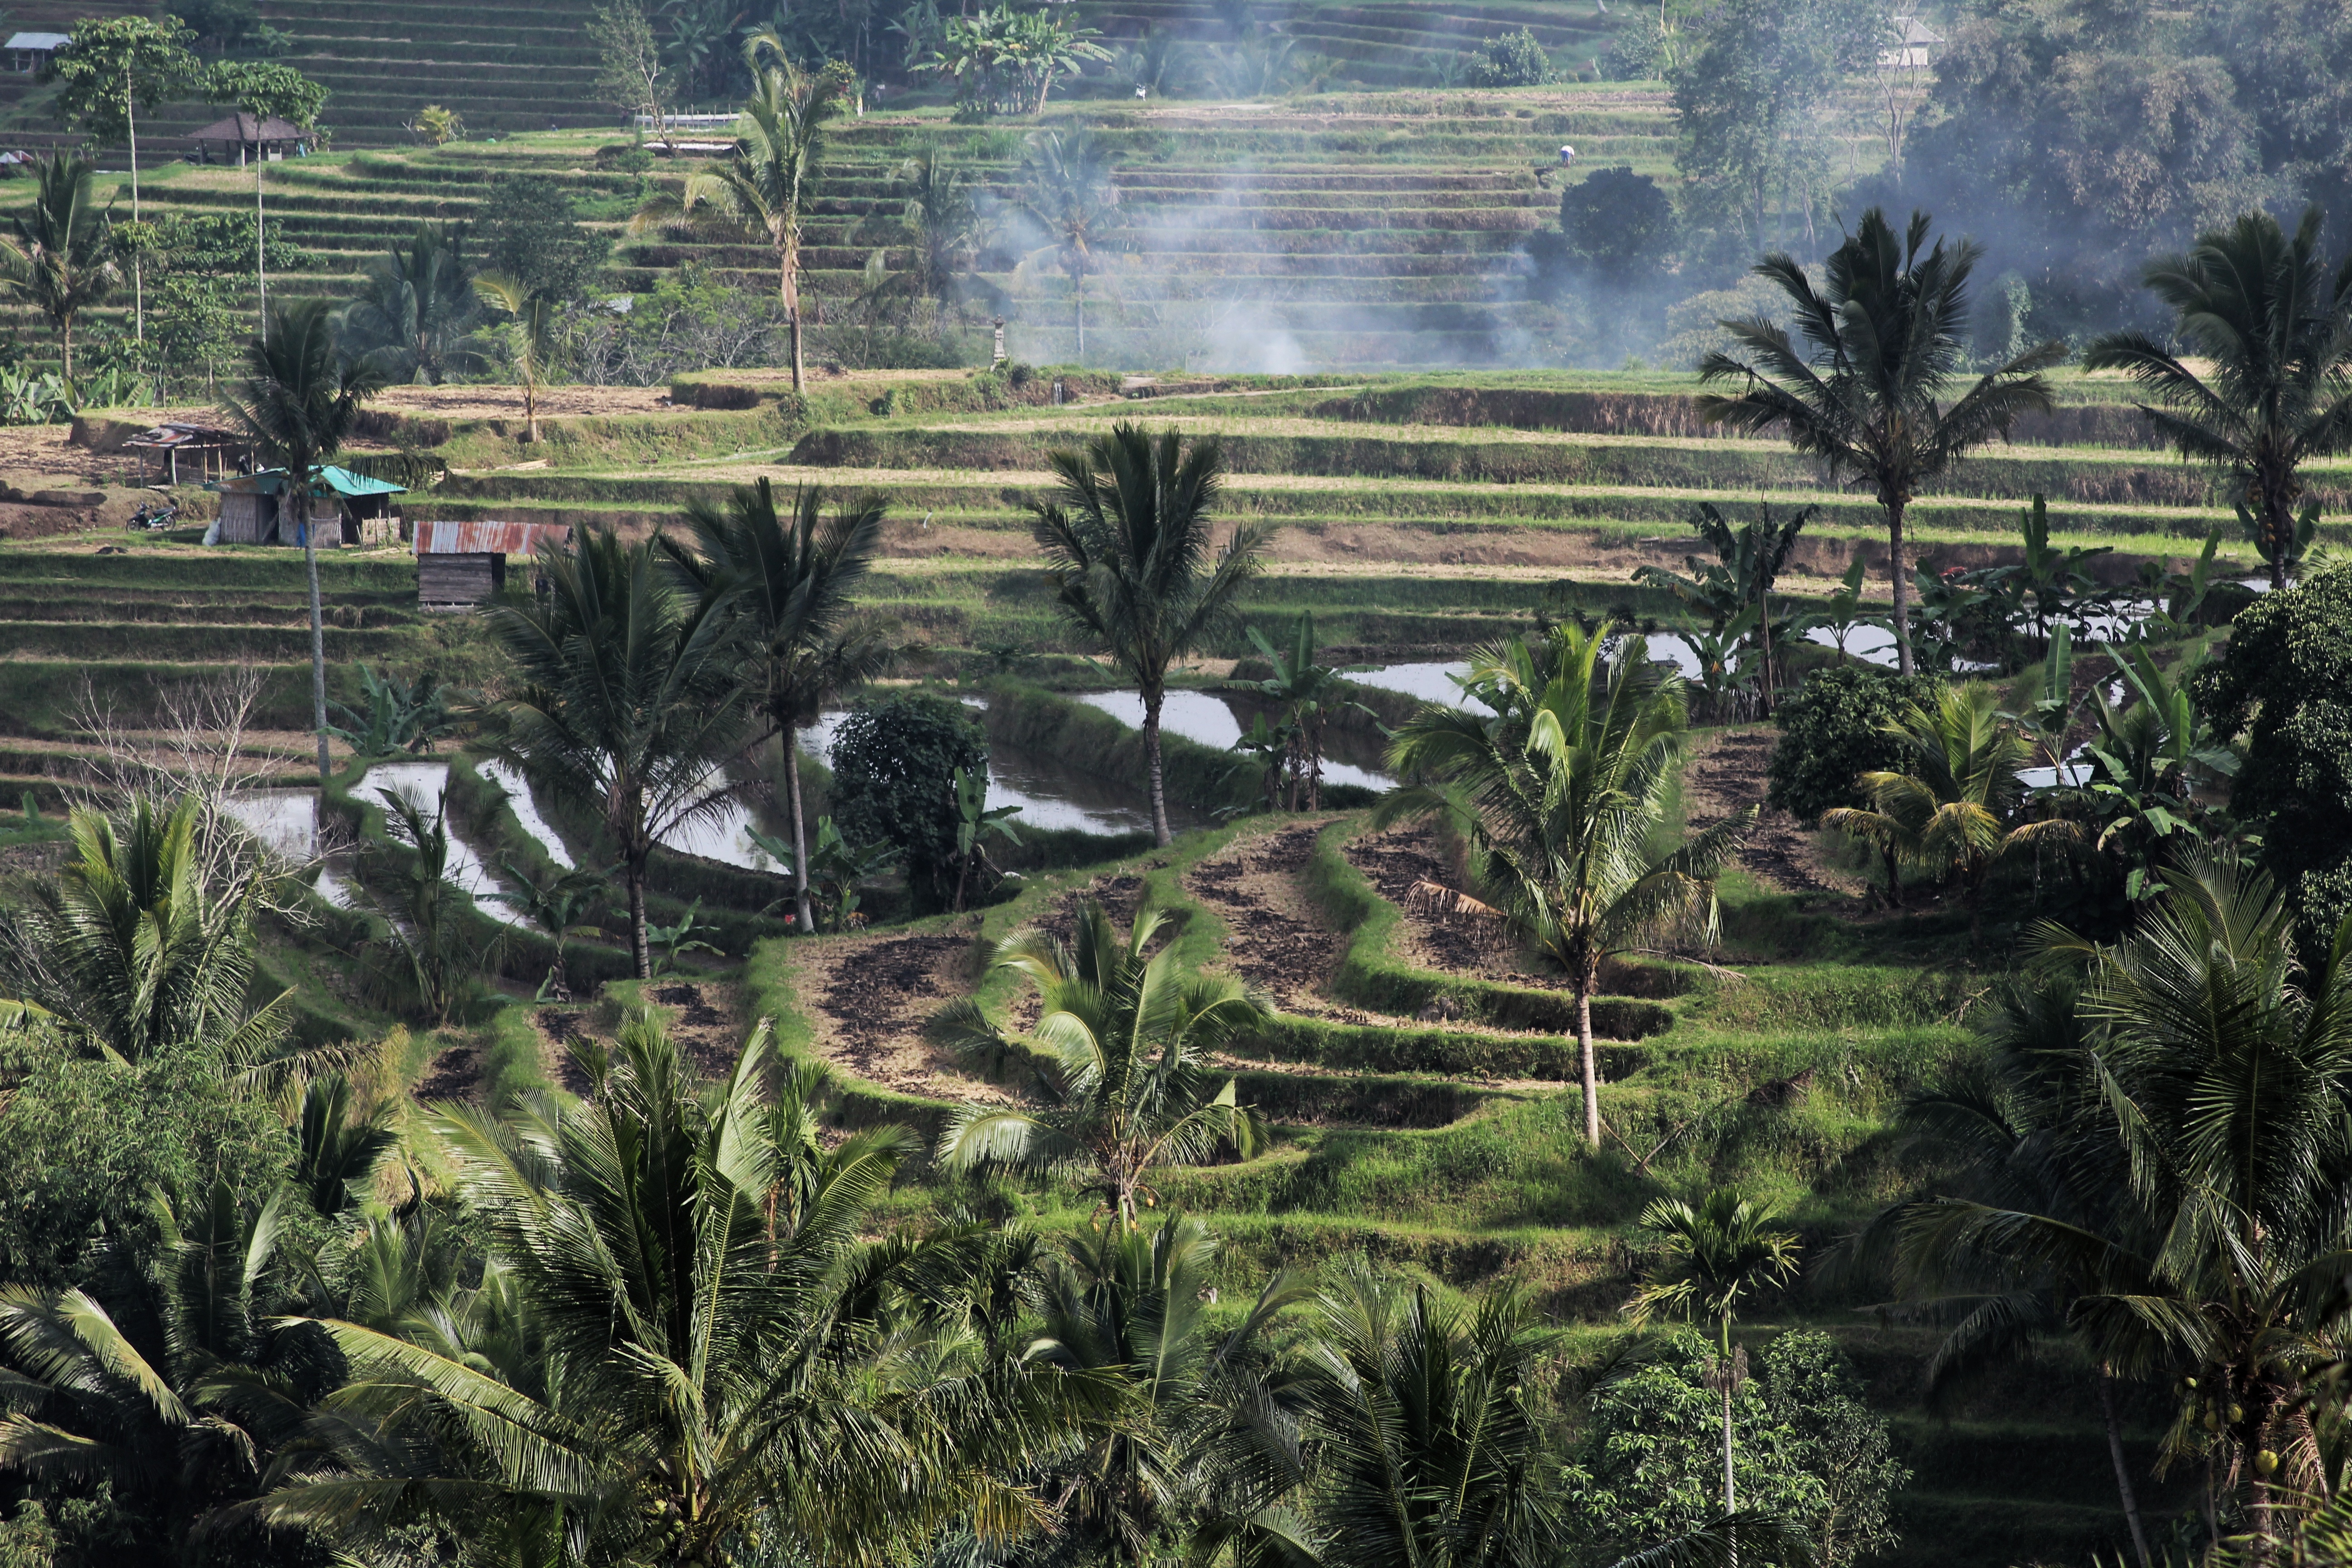 UNESCO Jatiluwih rice fields in Bali, Indonesia